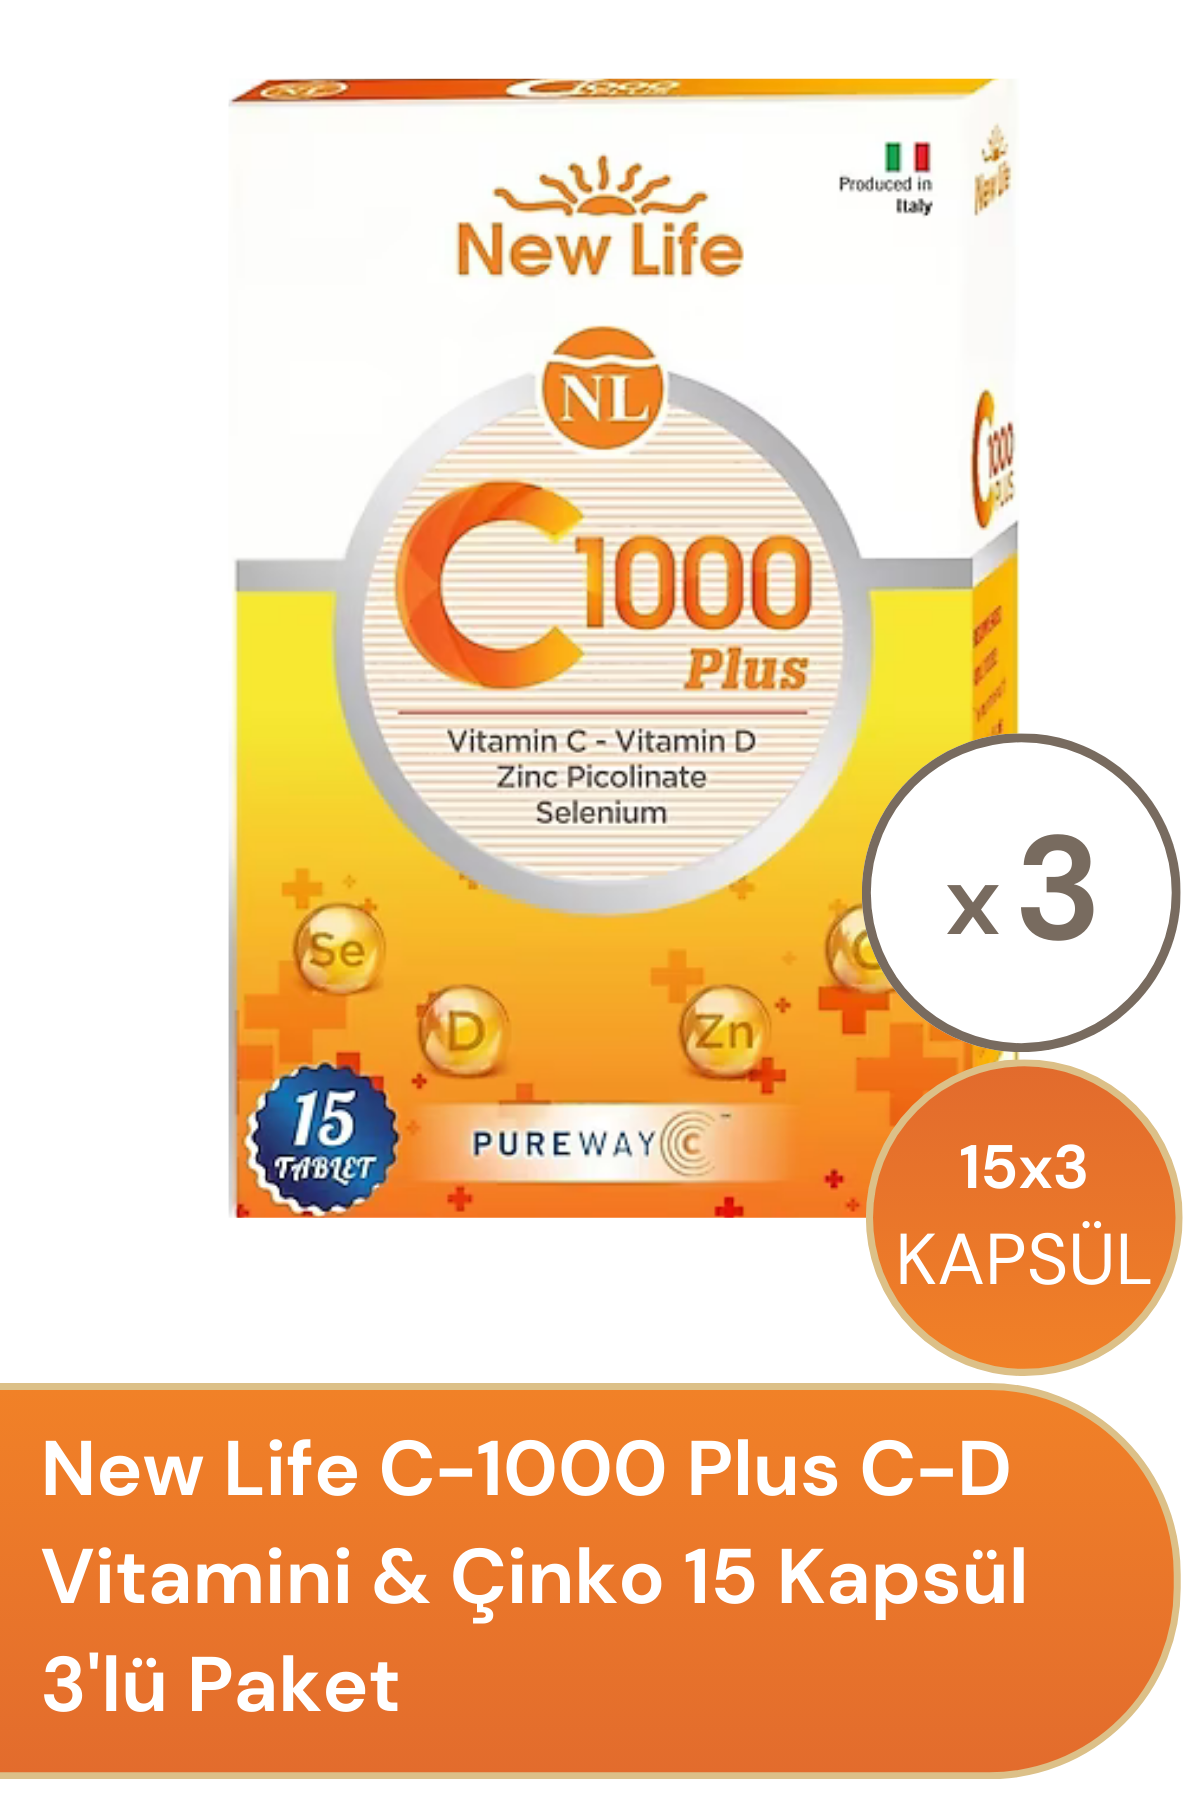 New Life C-1000 Plus C-D Vitamini & Çinko 15 Kapsül 3'lü Paket